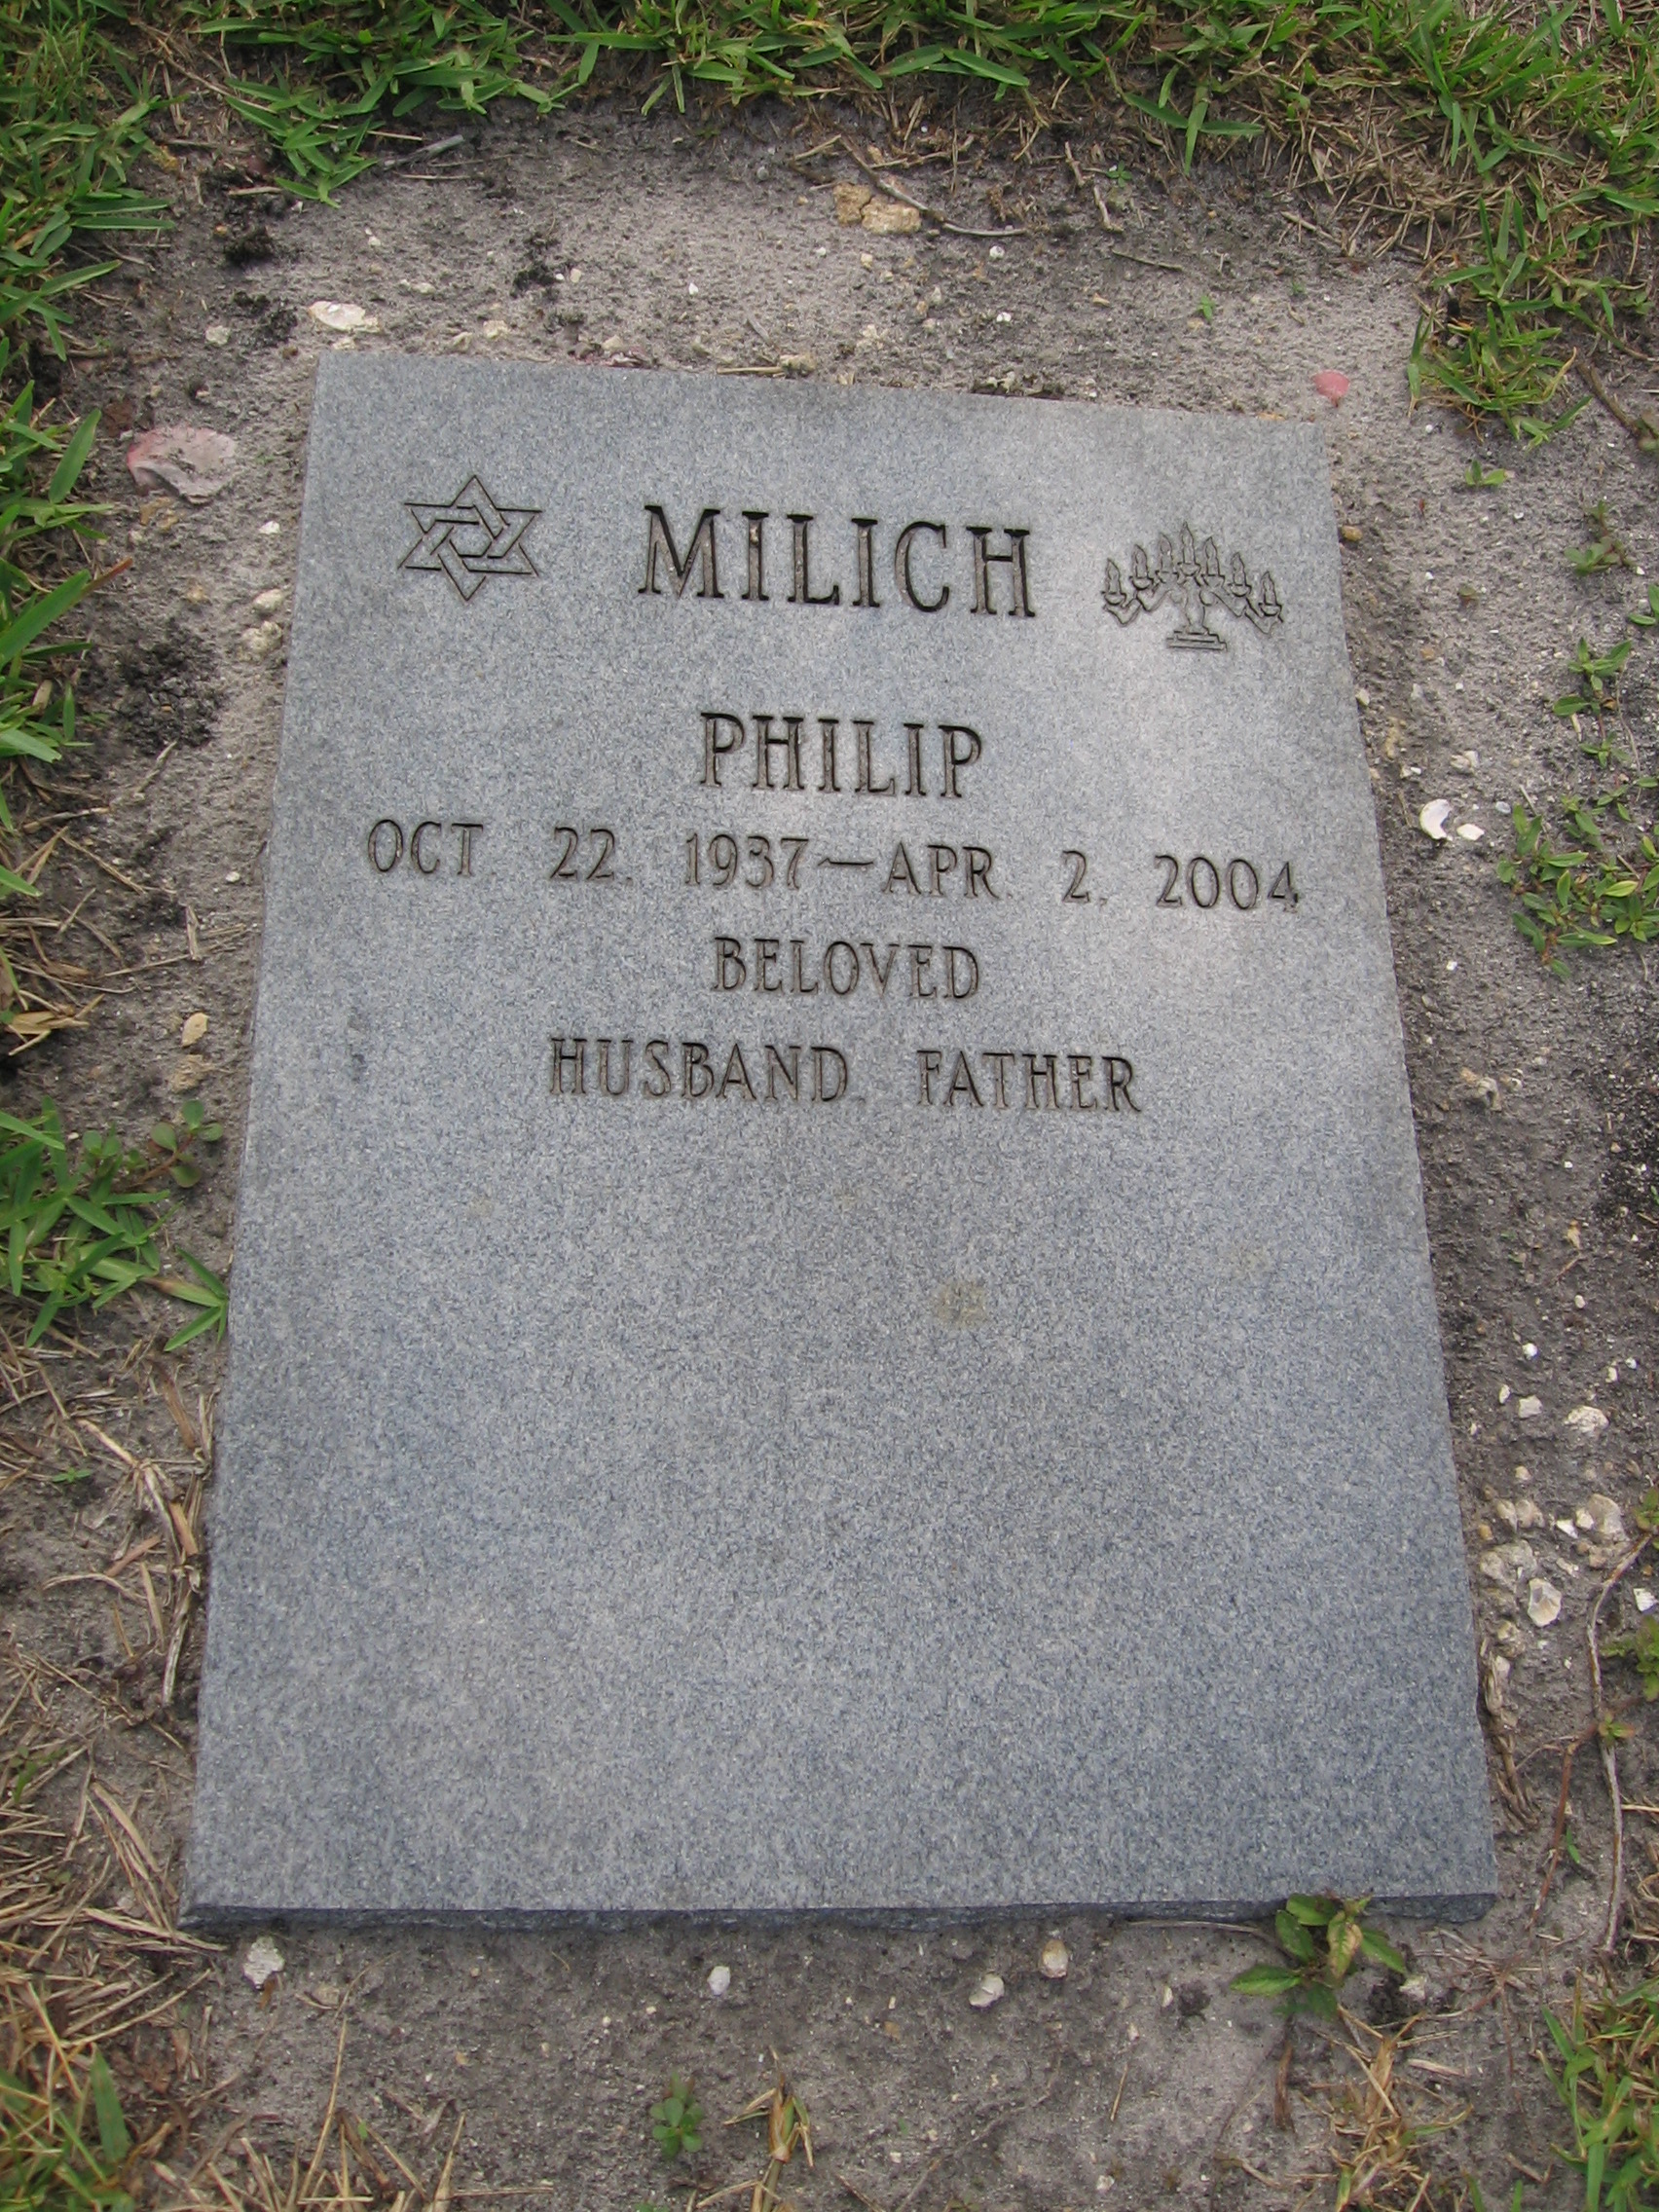 Philip Milich